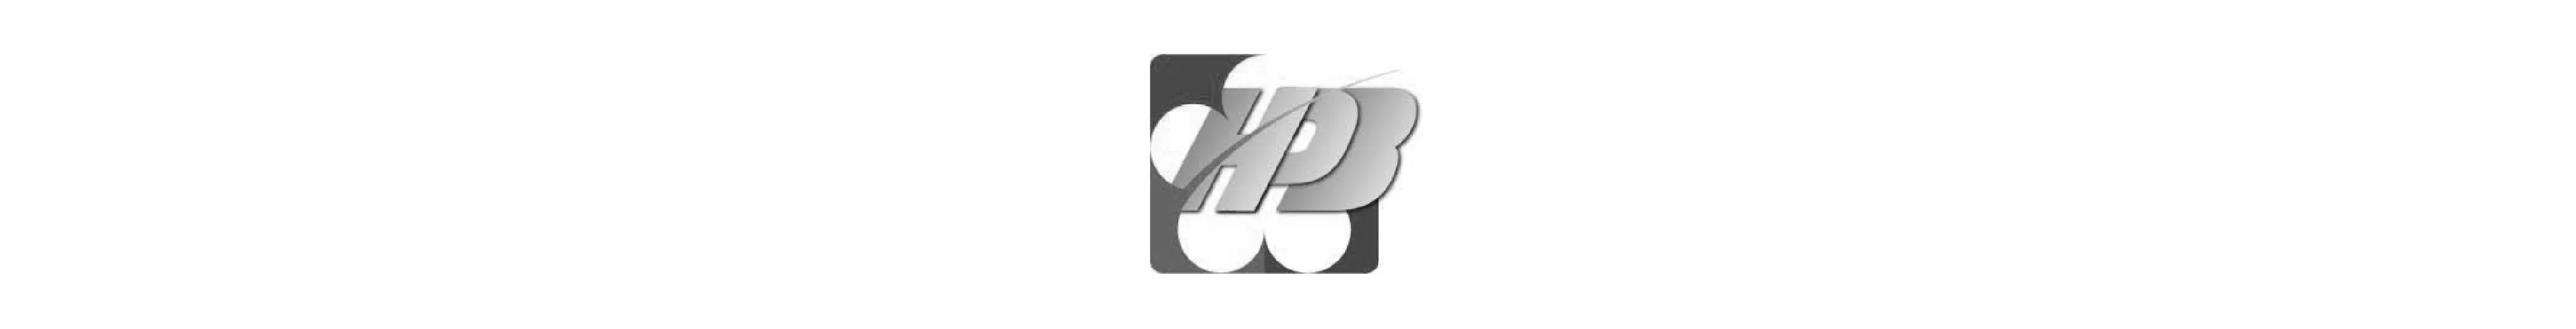 H.P.B_logo